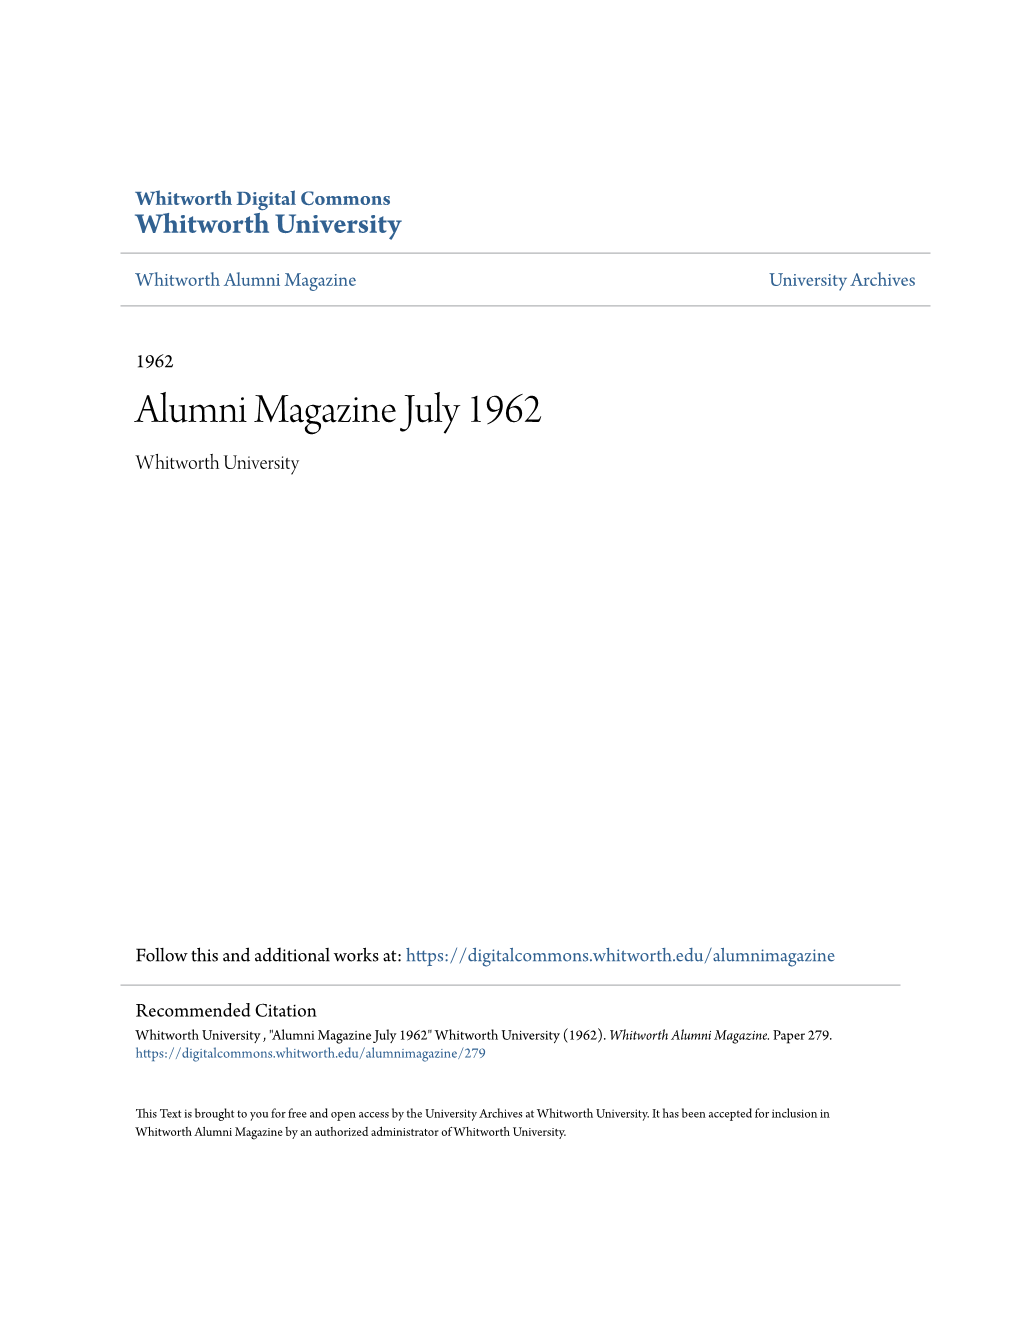 Alumni Magazine July 1962 Whitworth University